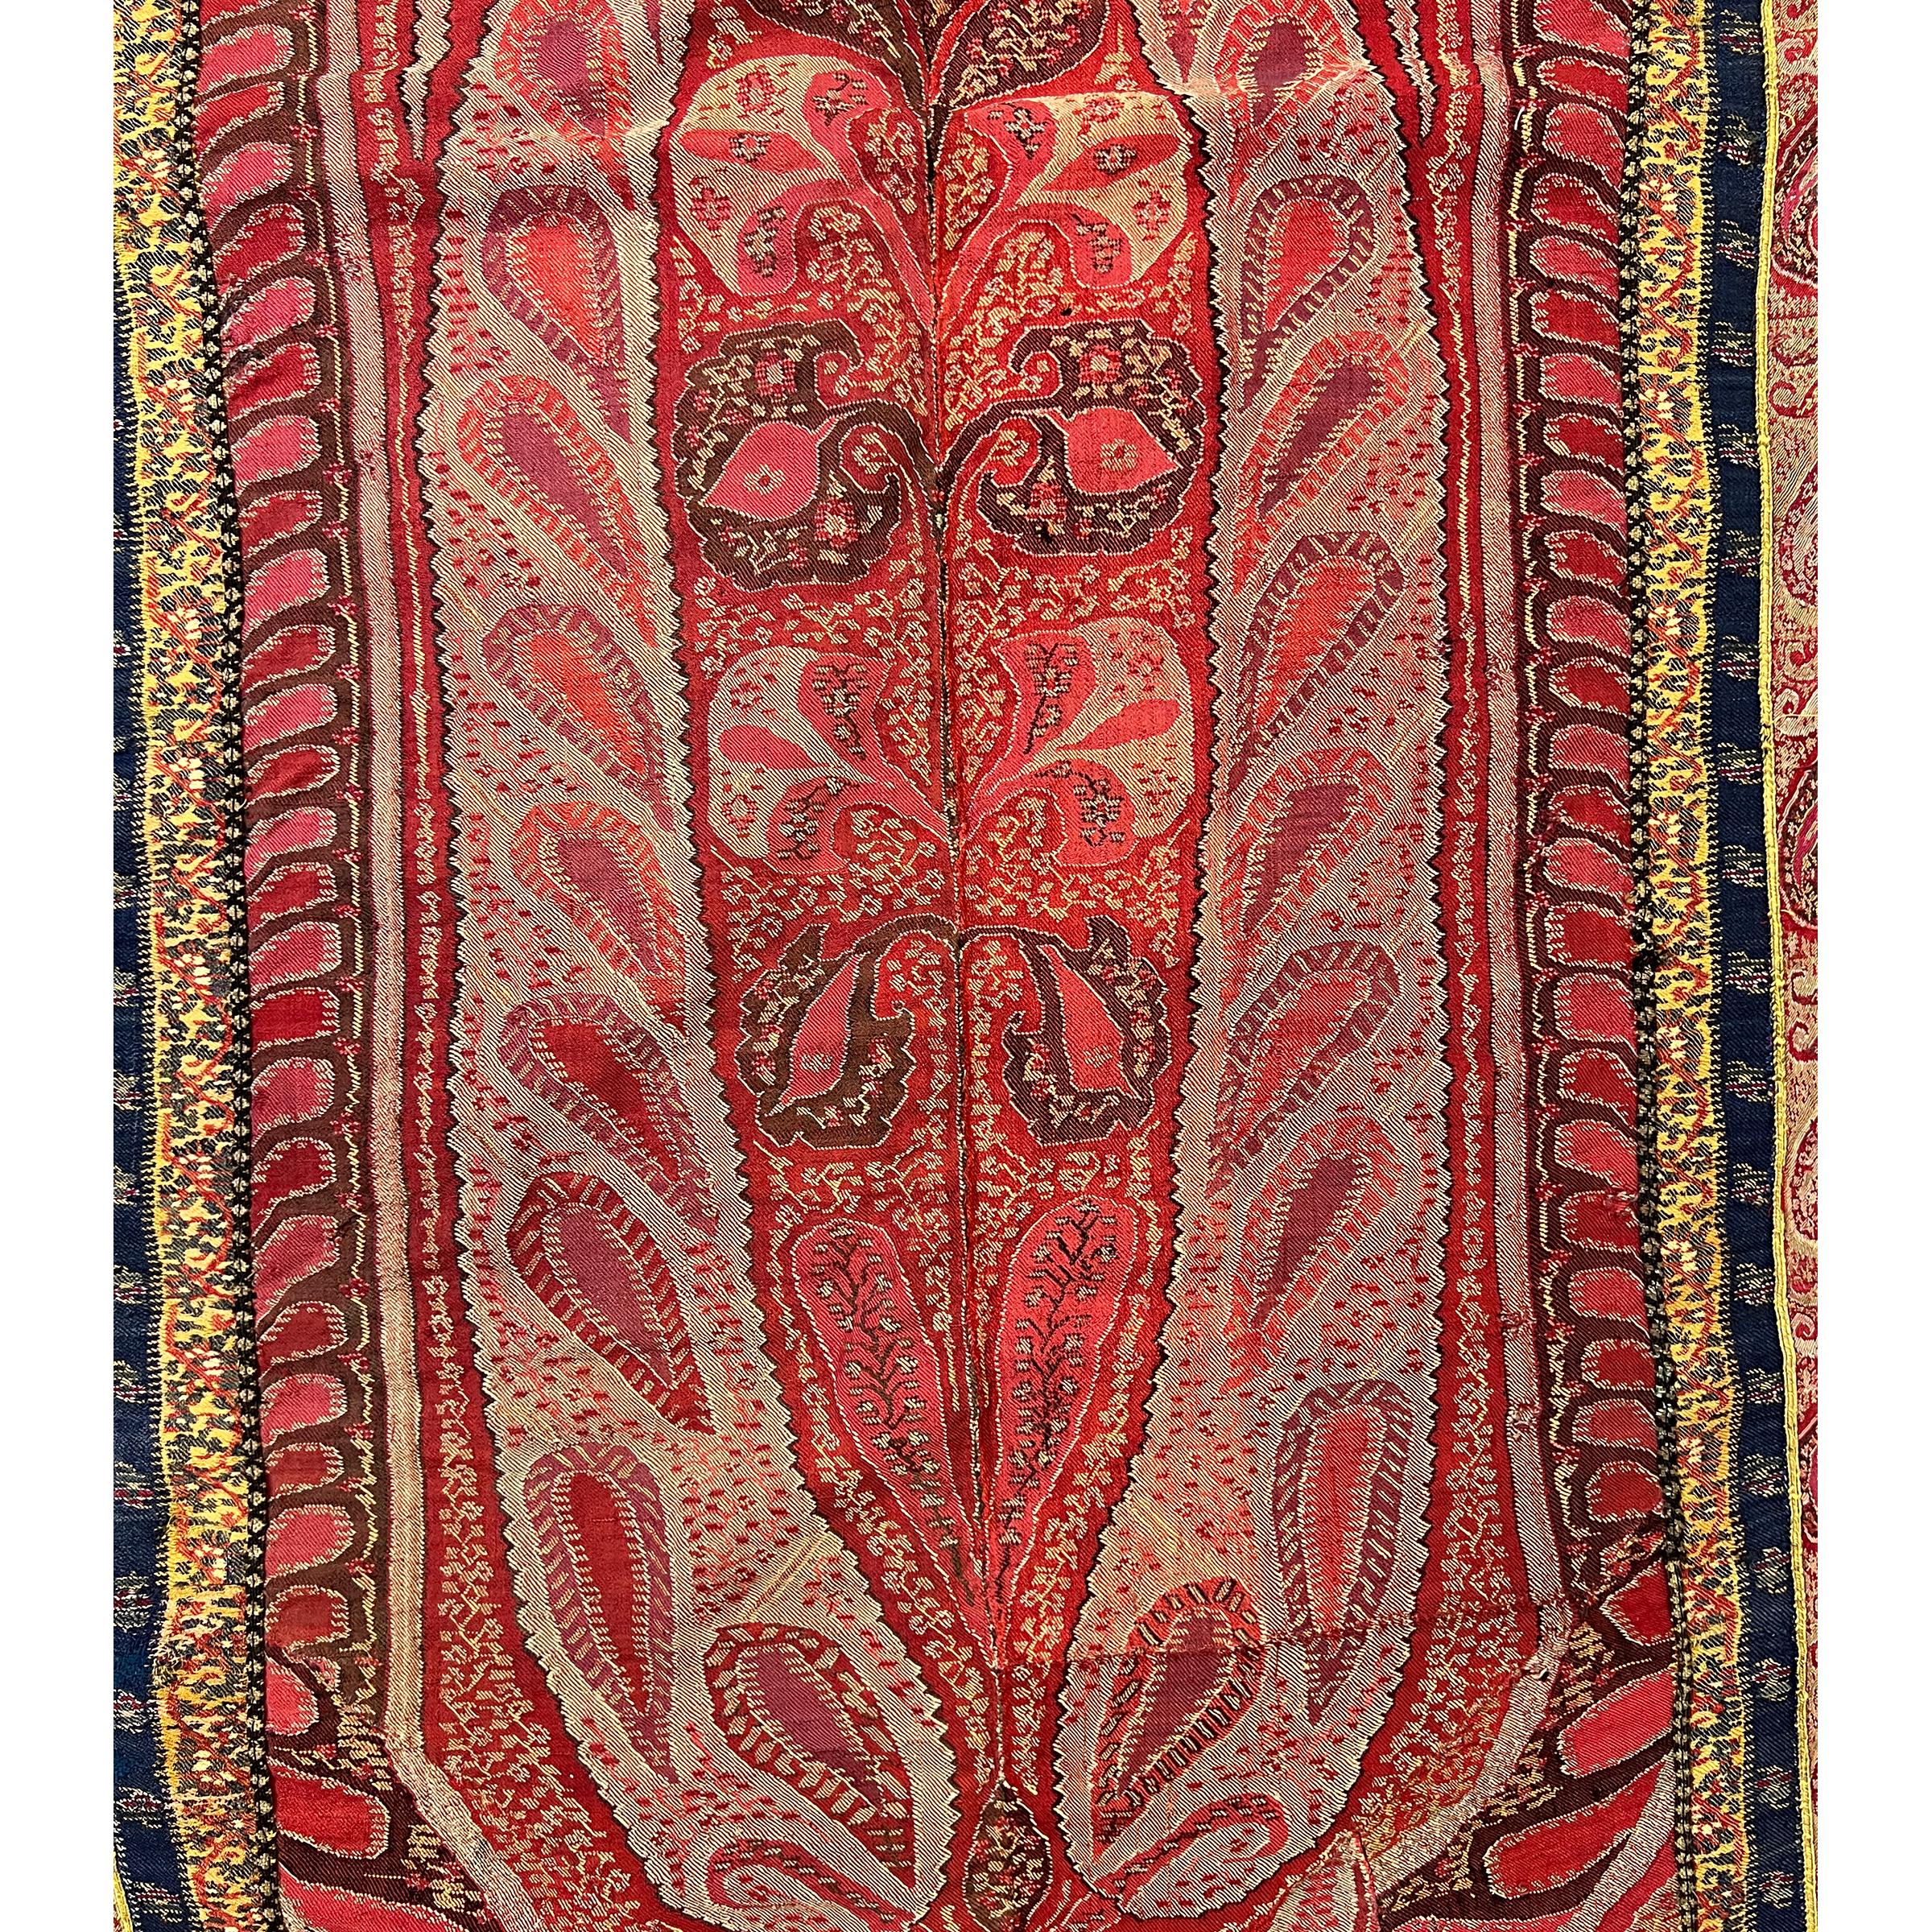 Cotton Antique 19th Century Indian Textile Runner Boteh Design For Sale